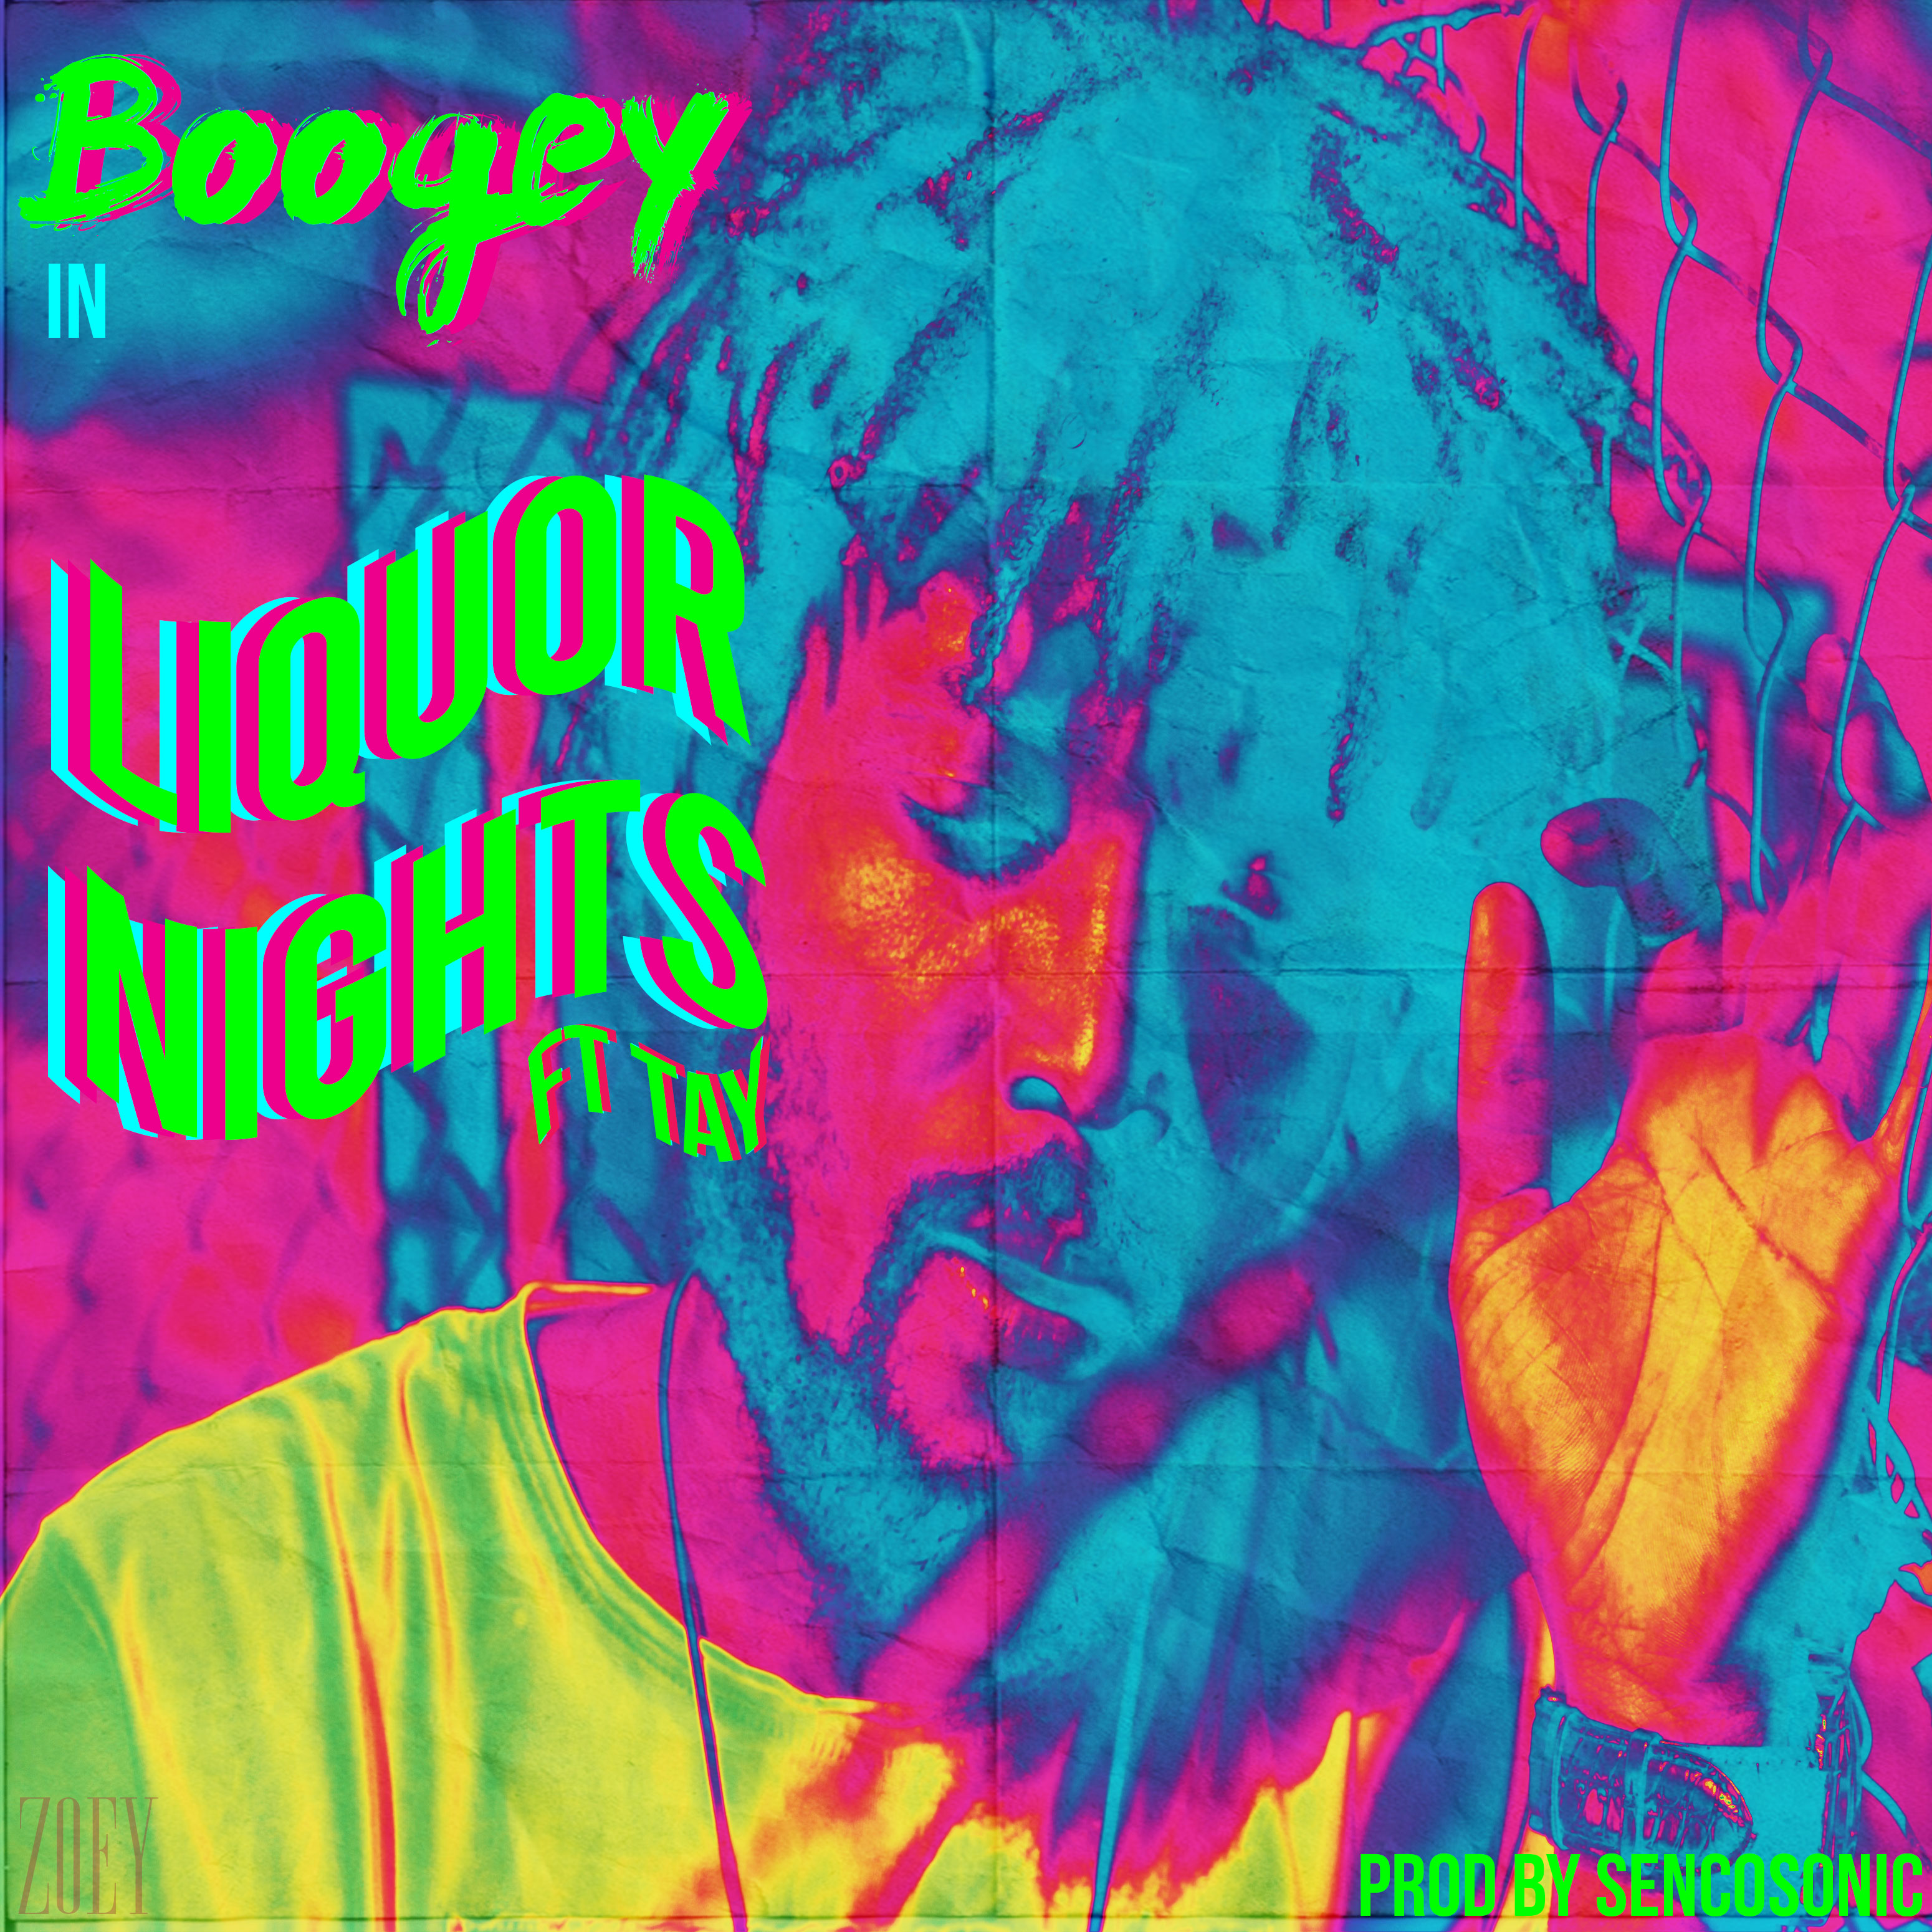 New Music: Boogey – Liquor Nights (Ft. Tay) + Lyric Video